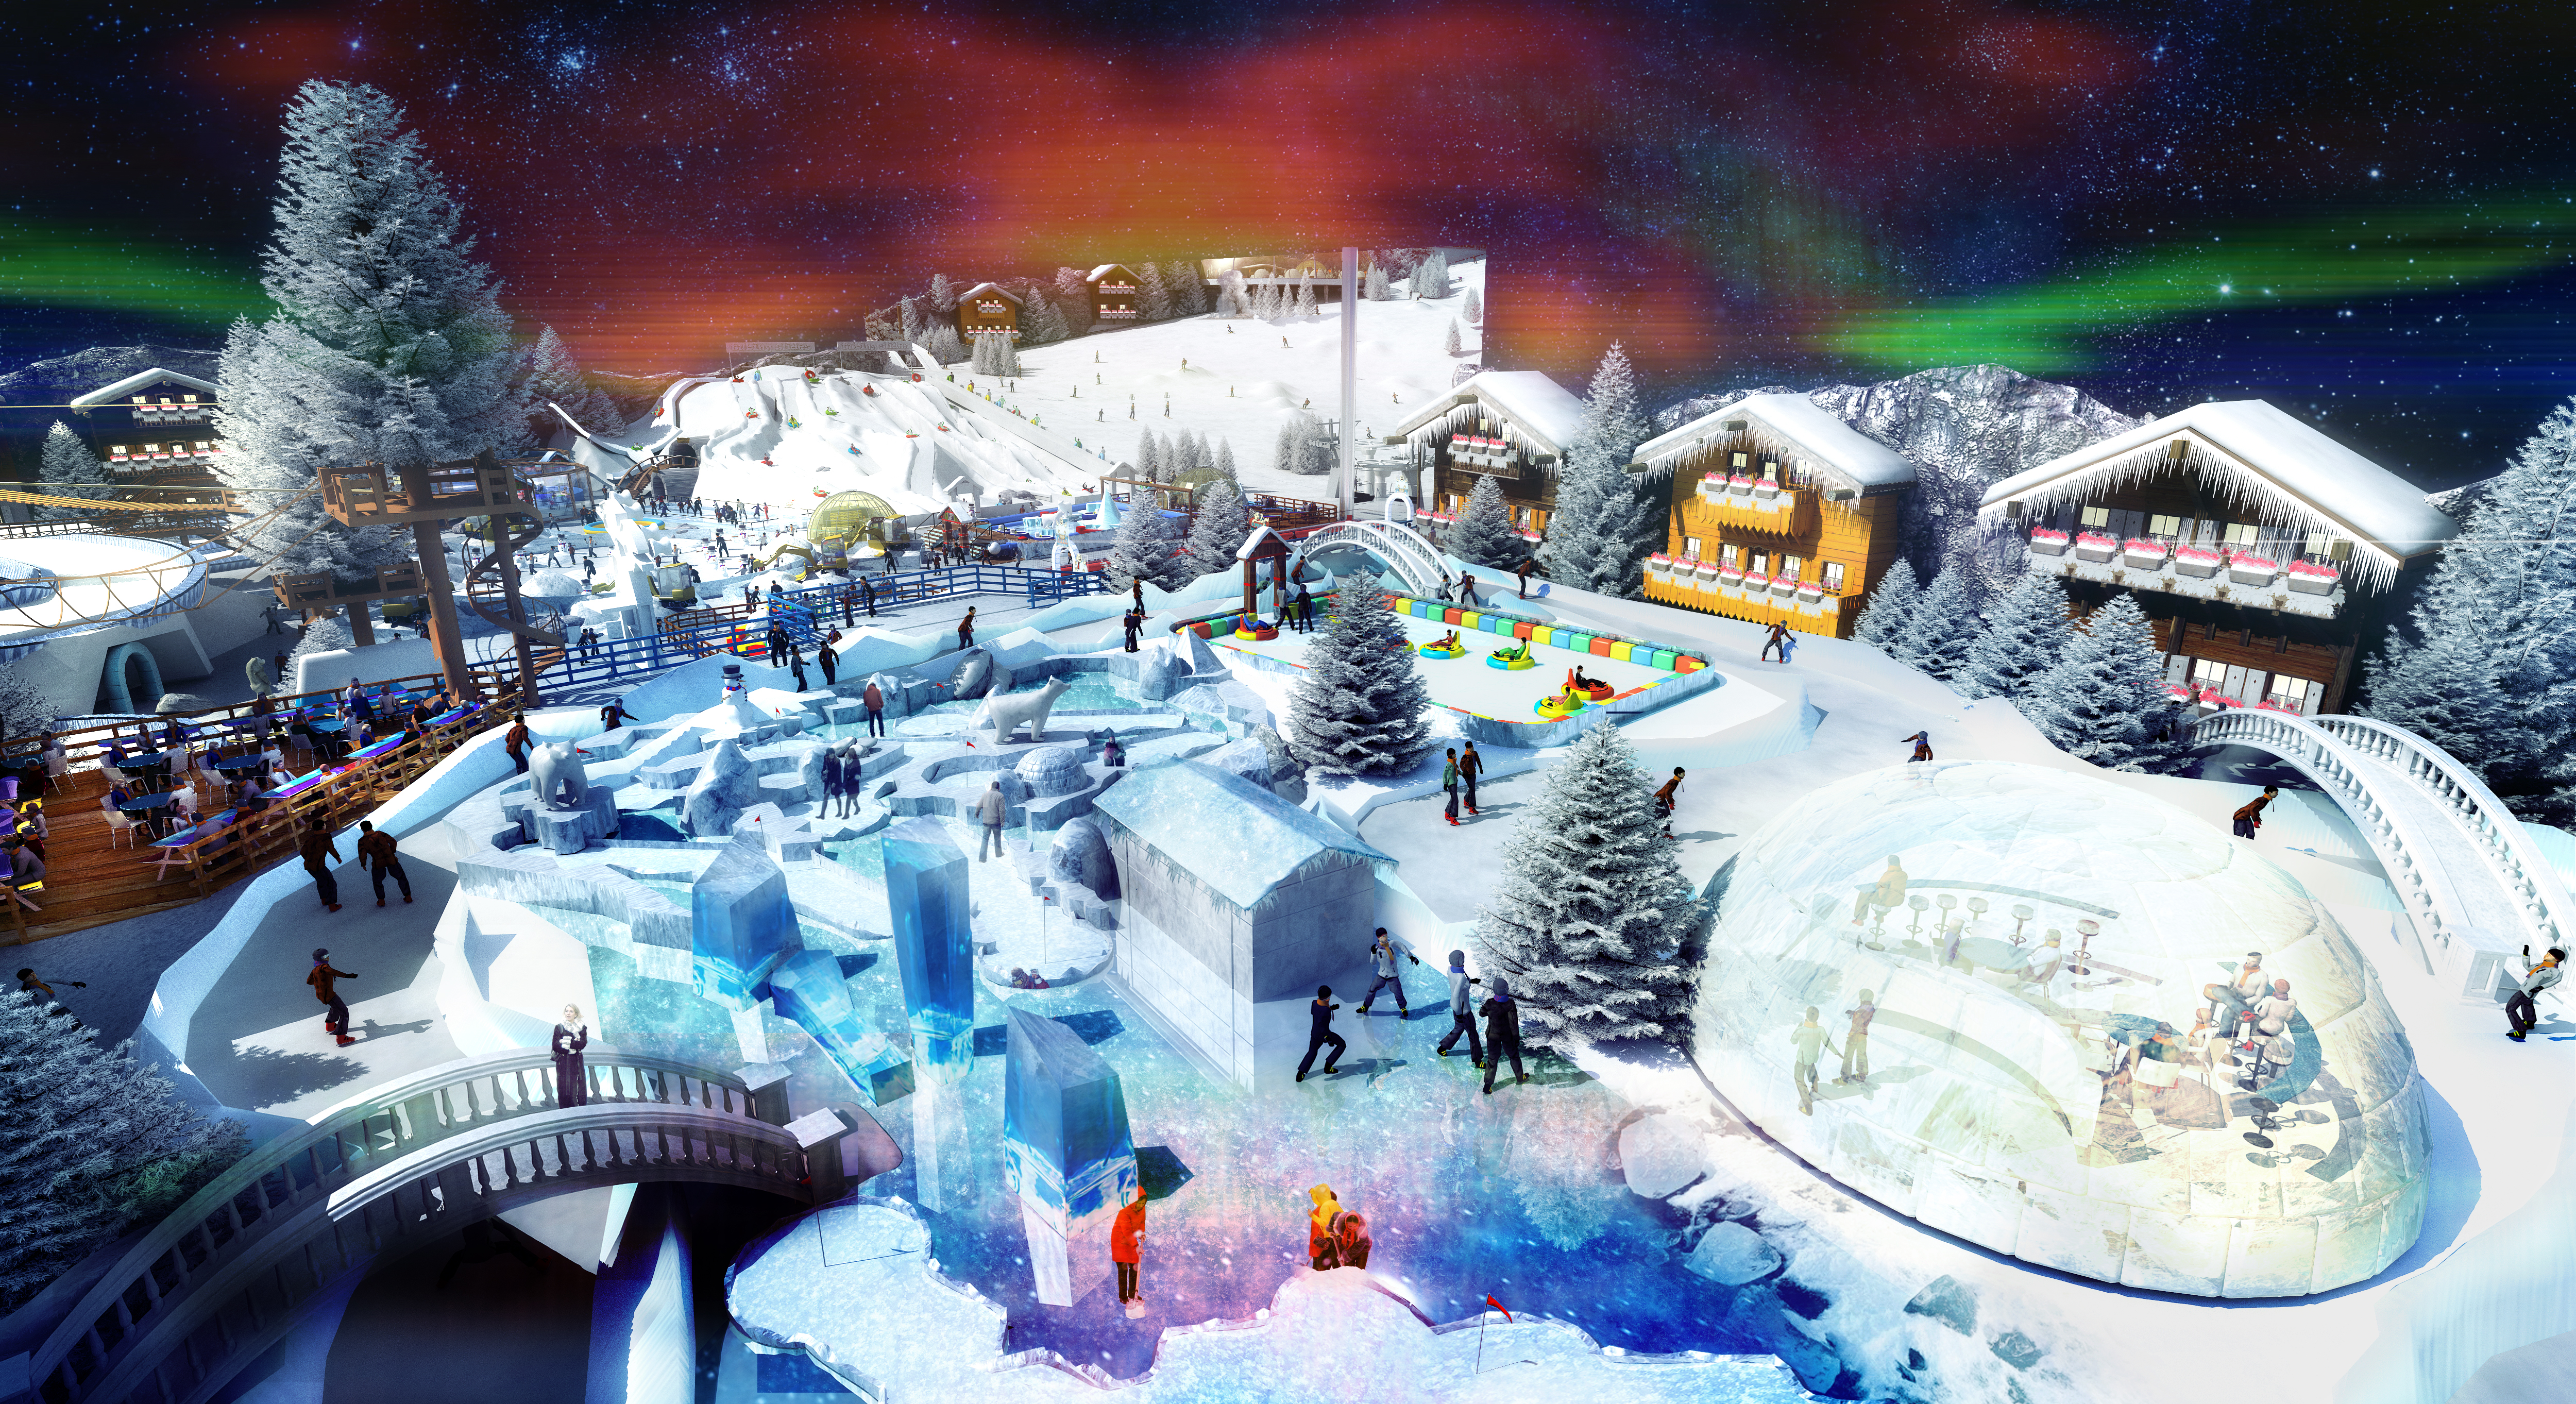 Indoor snow themepark - Alpine / Arctic Village